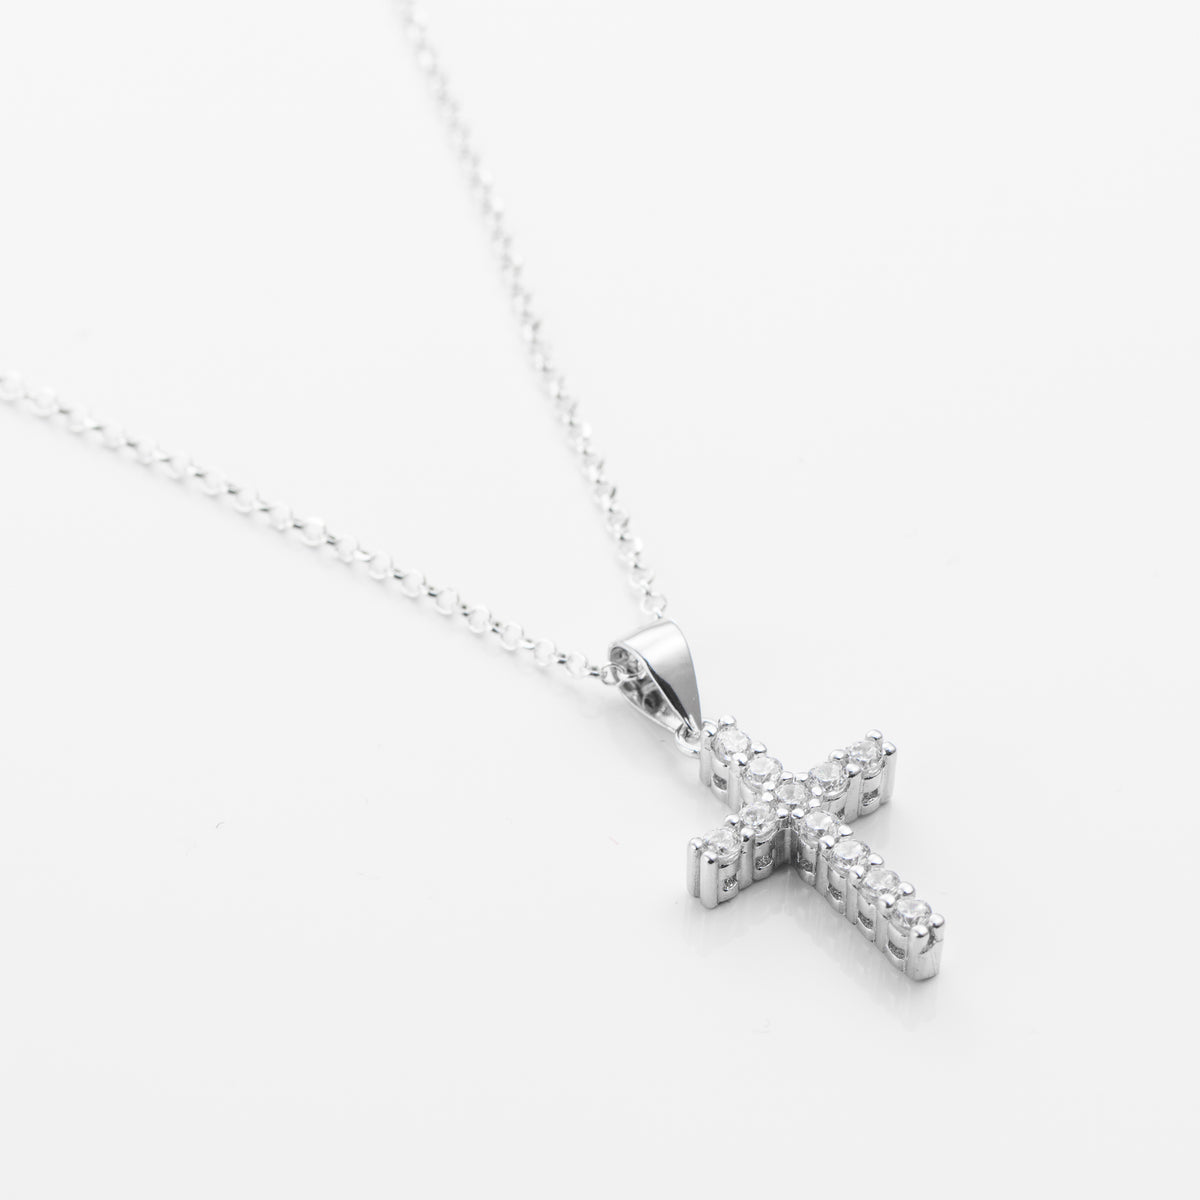 Silver small cross pendant necklace